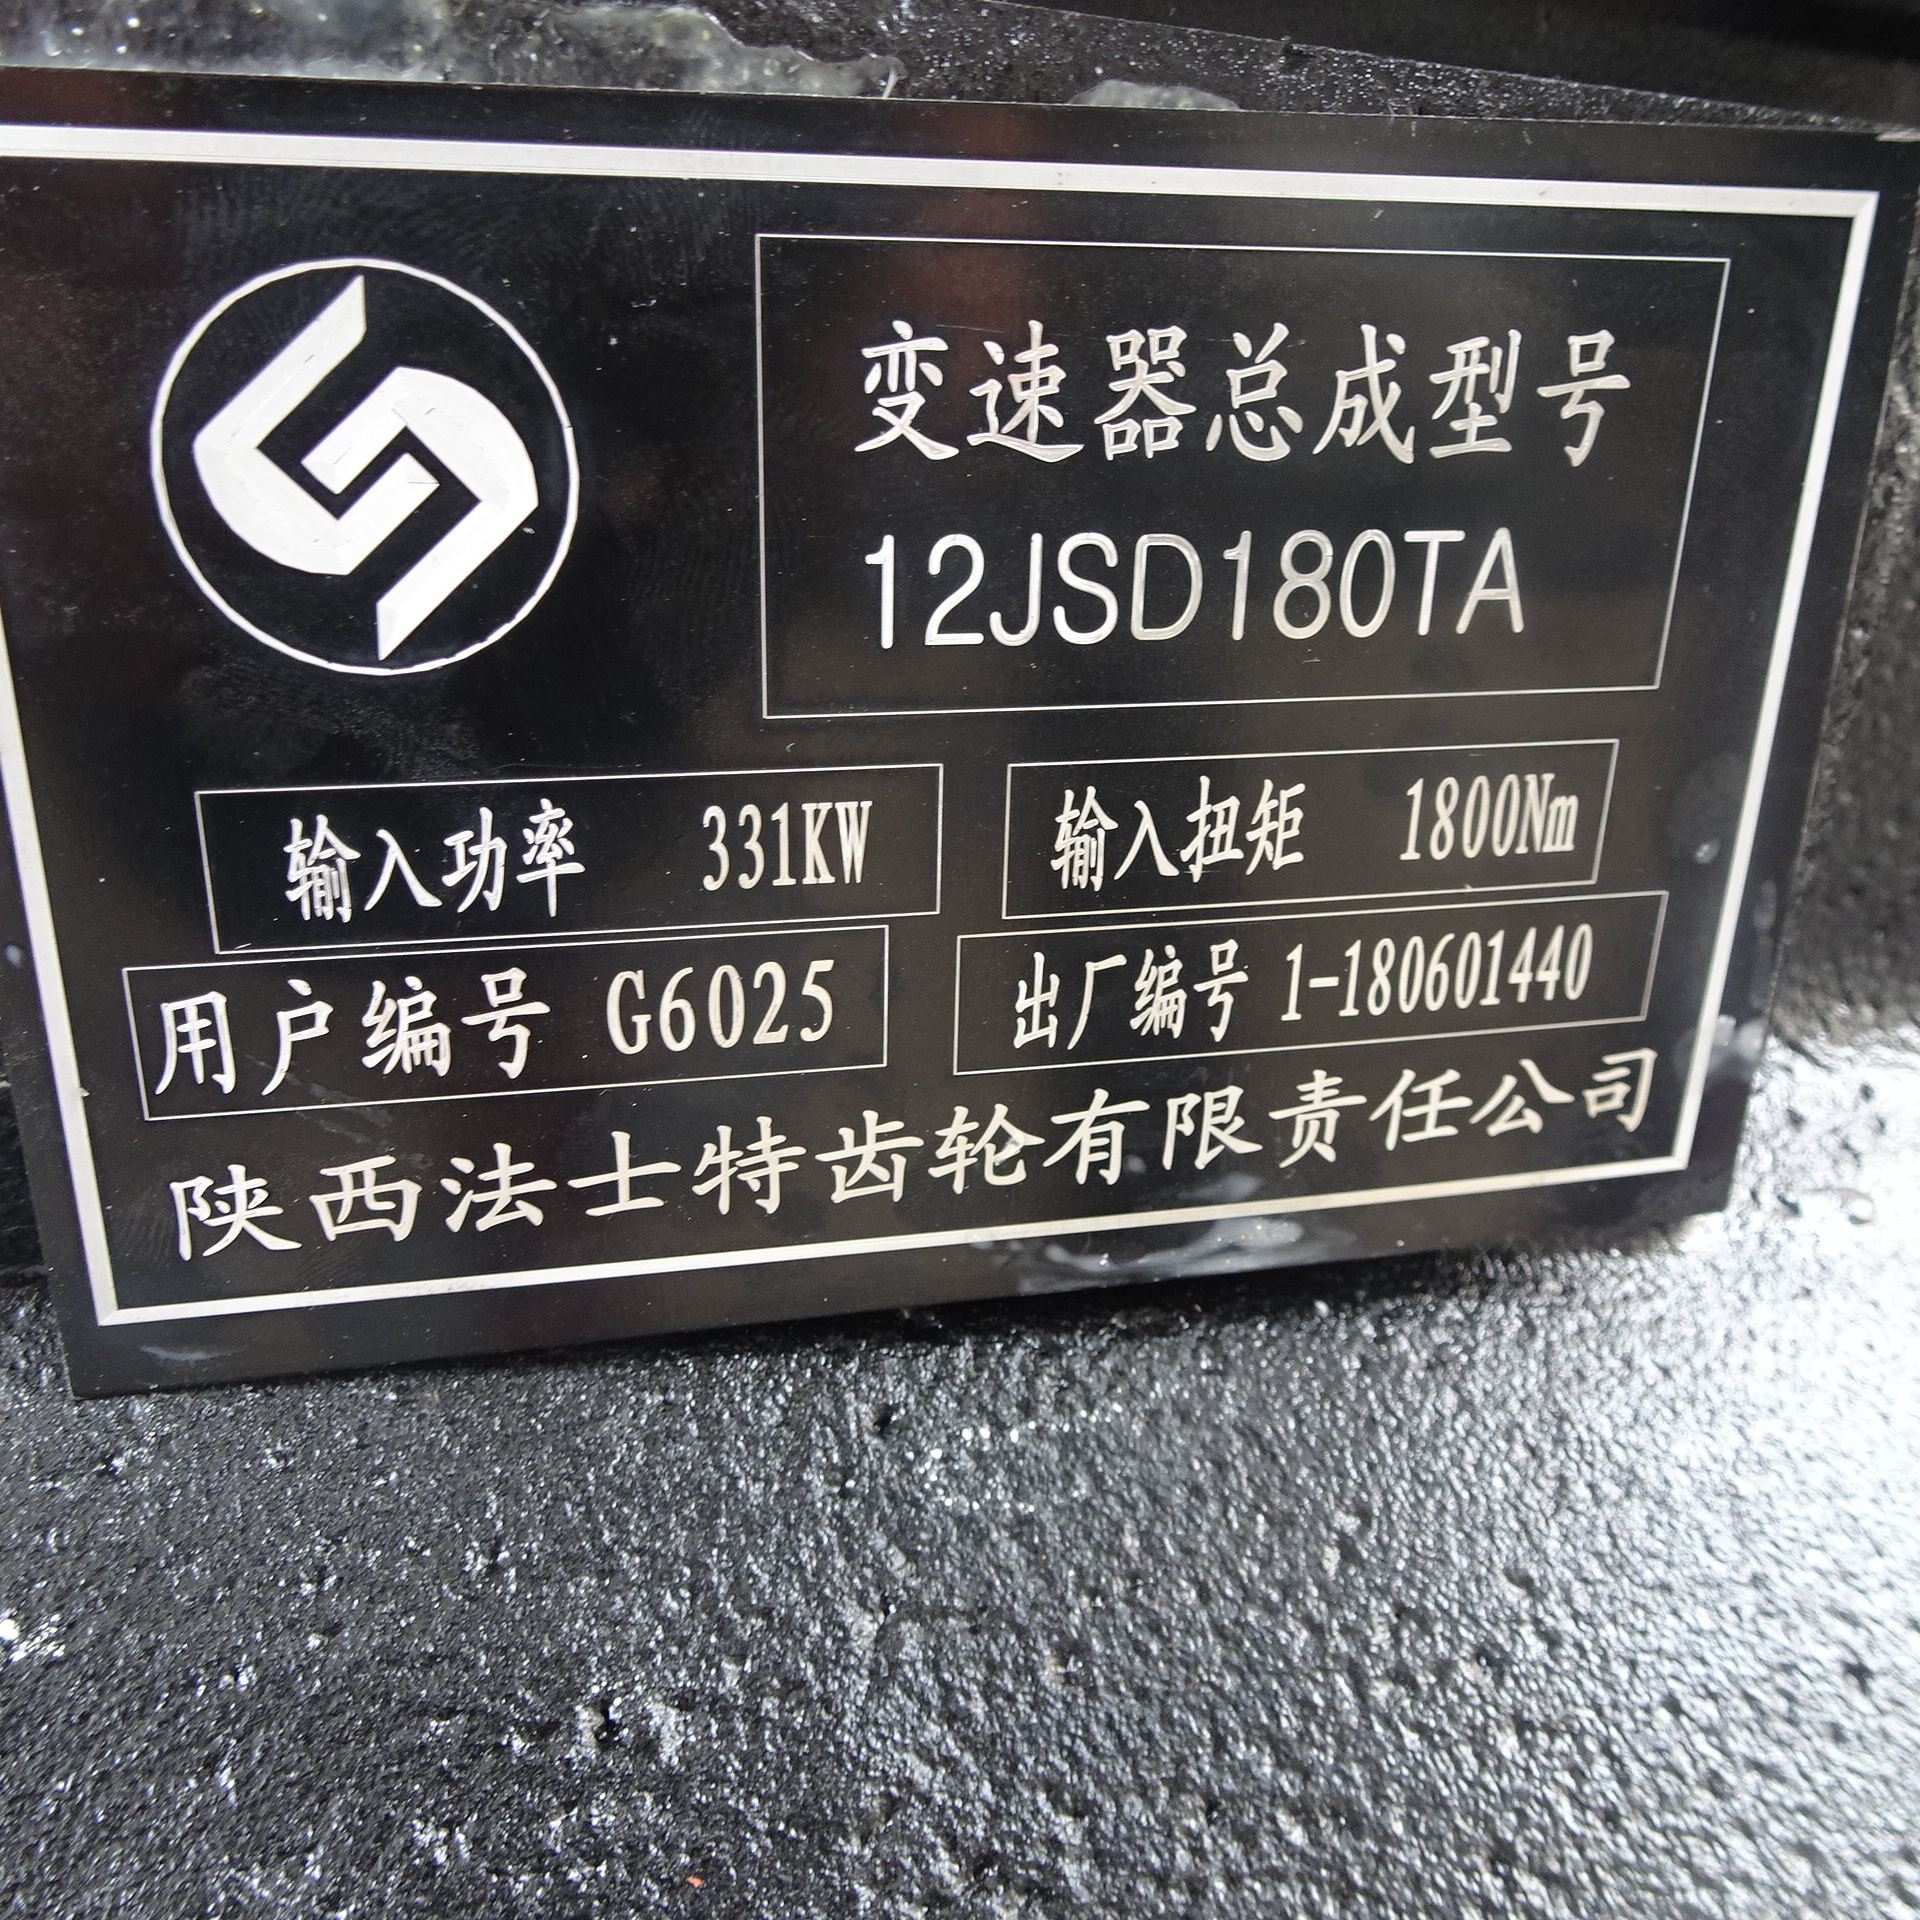 Used In Shantui Gearbox Black Long Warranty Period Gearbox Zq450